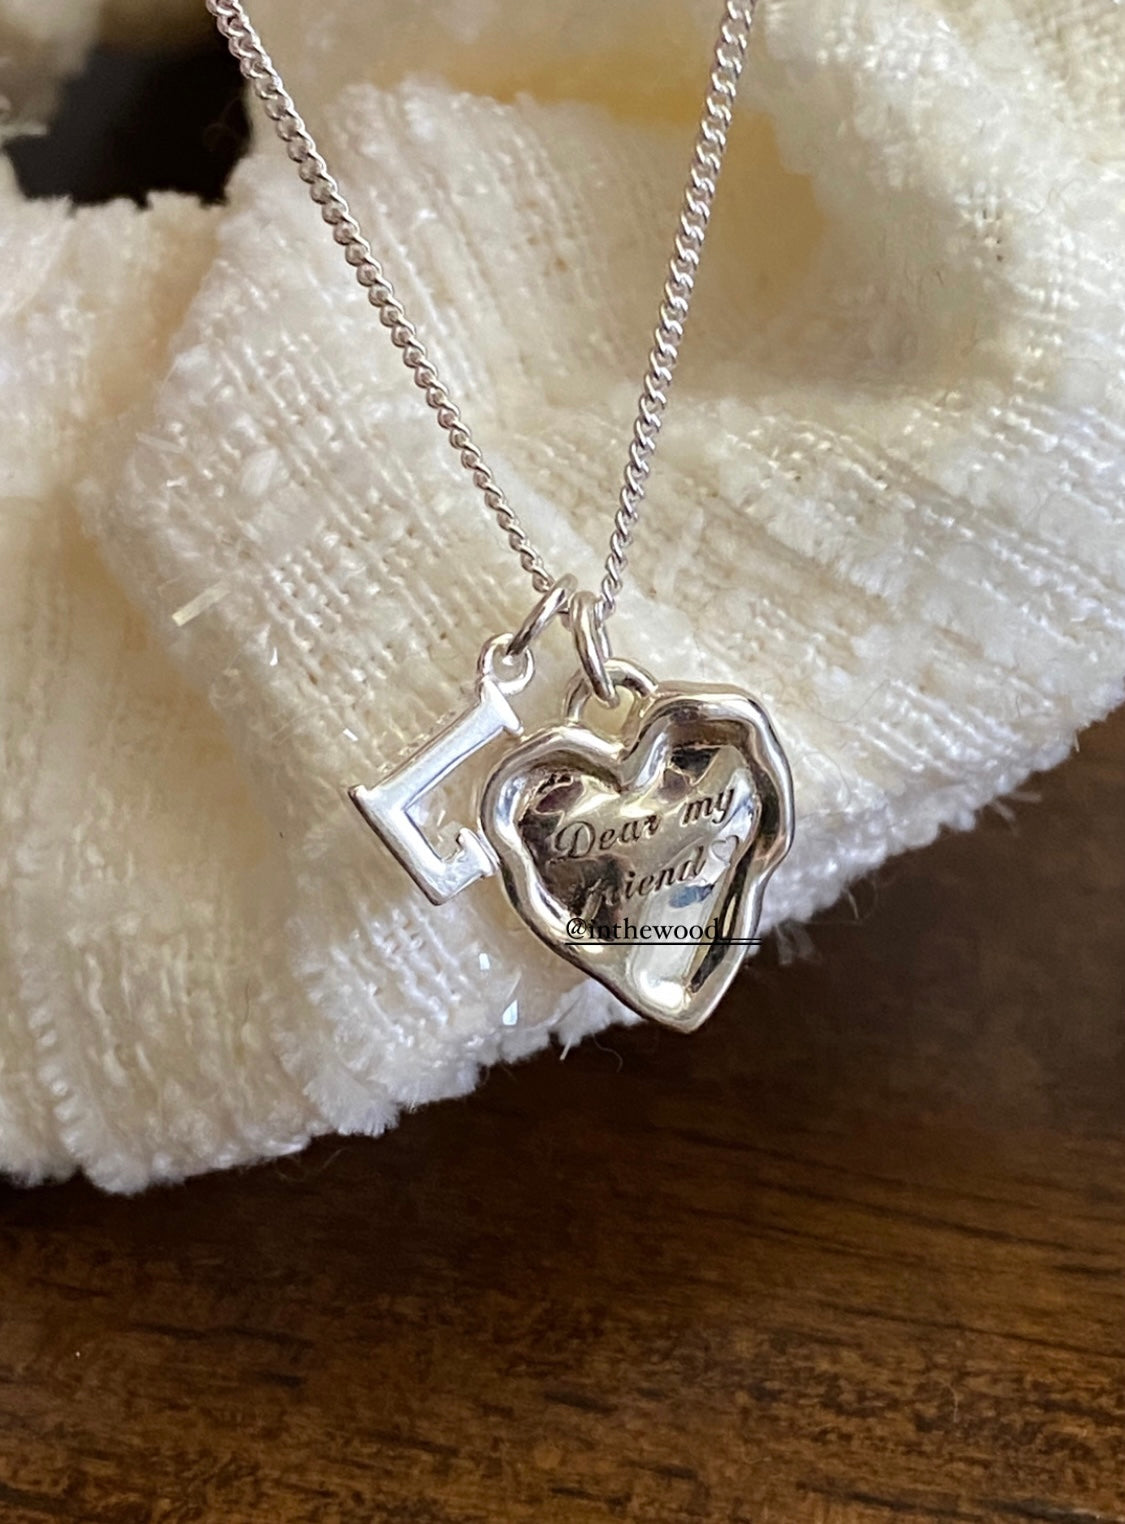 [925silver] 客制刻字🤍Ruffles Letter Heart Necklace